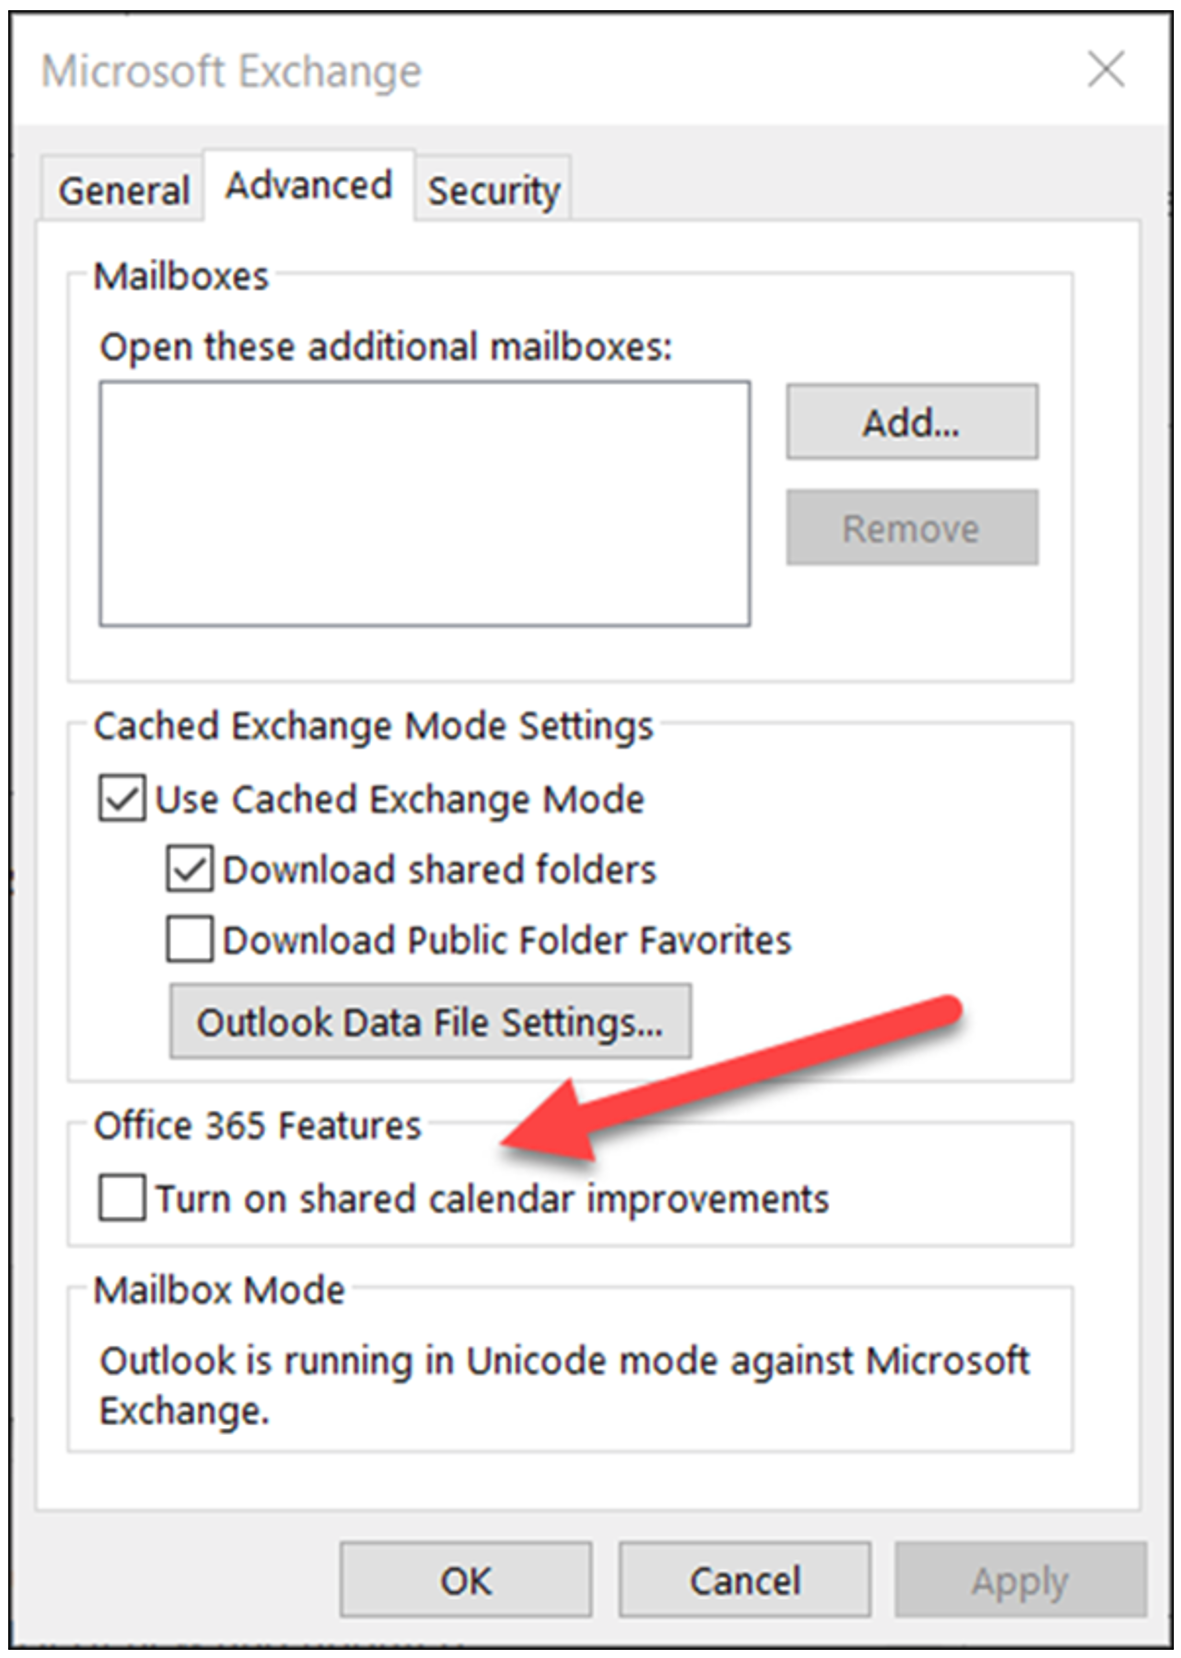 Turn on shared calendars improvements check box in Microsoft Exchange dialog box